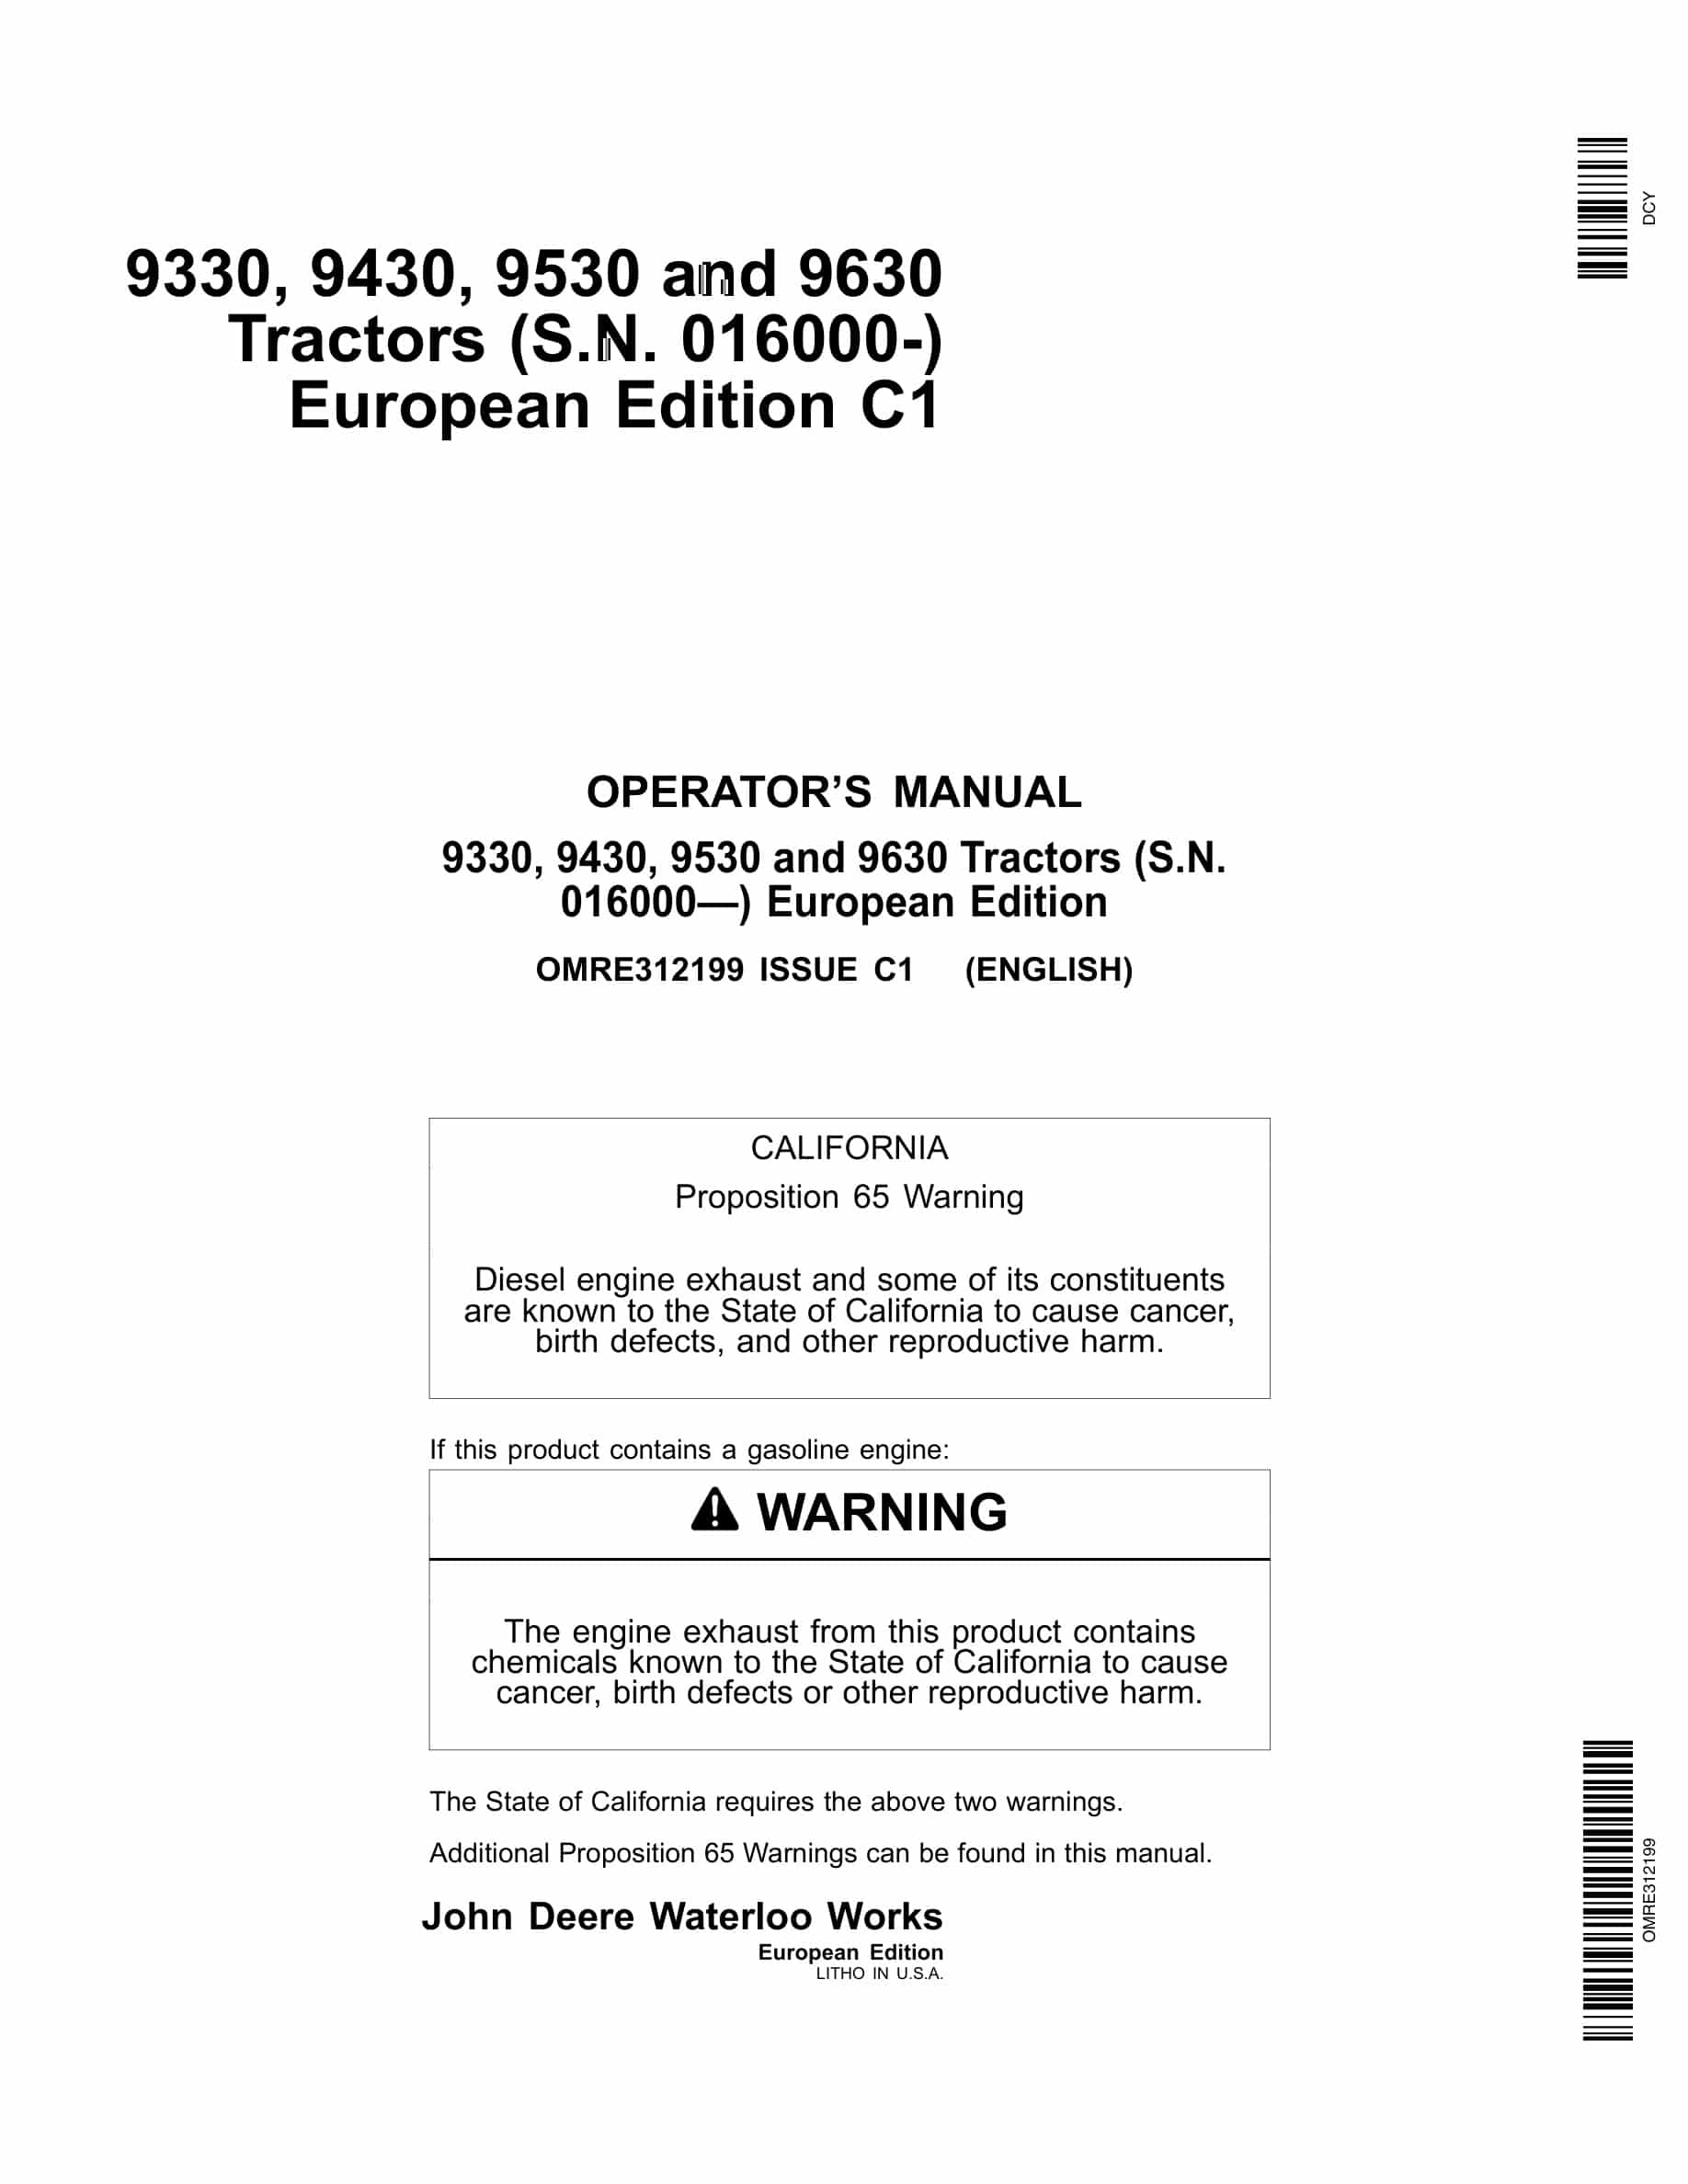 John Deere 9330, 9430, 9530 And 9630 Tractors Operator Manuals OMRE312199-1